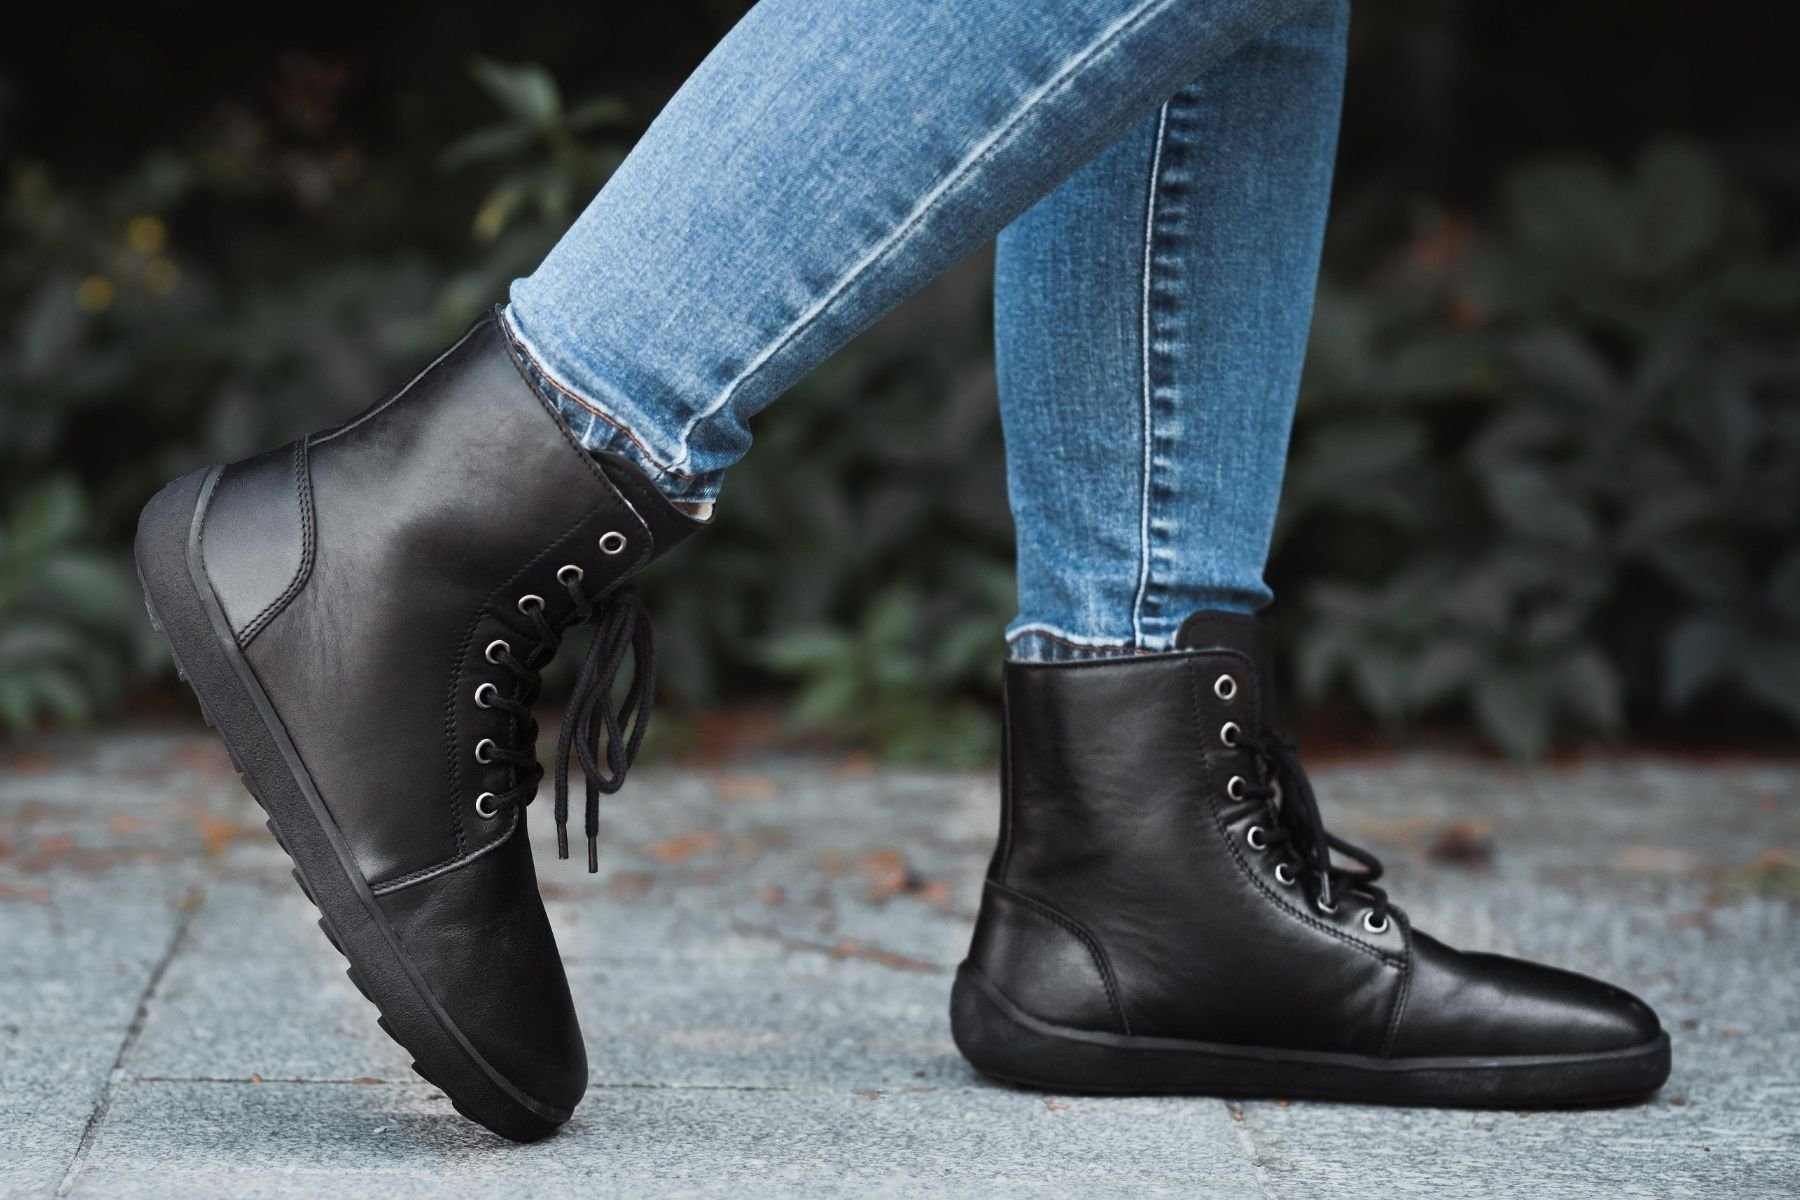 Winter Barefoot Boots Be Lenka Winter 3.0 - Black